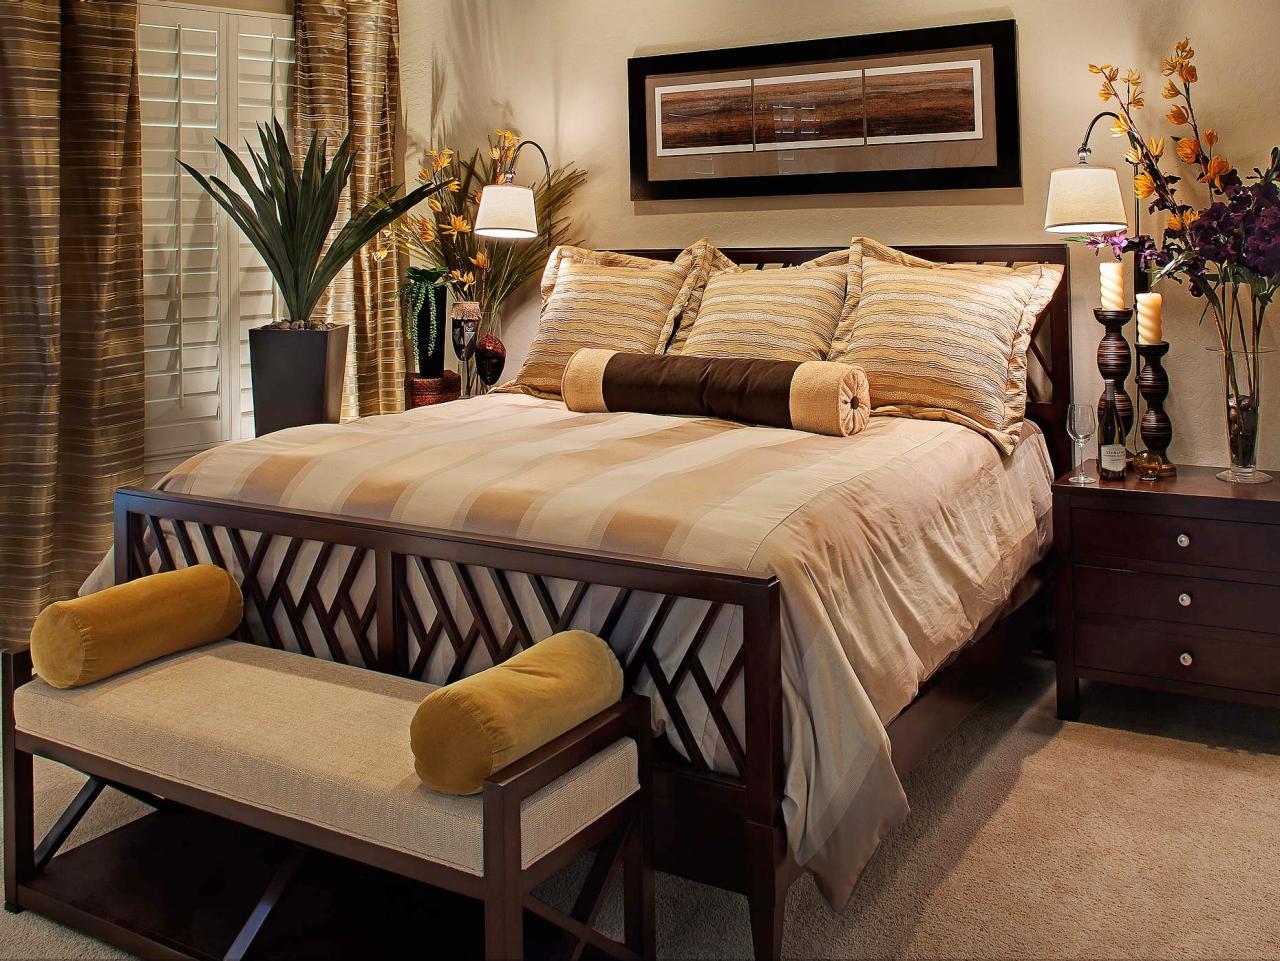 traditional bedroom design inspiration photo - 8